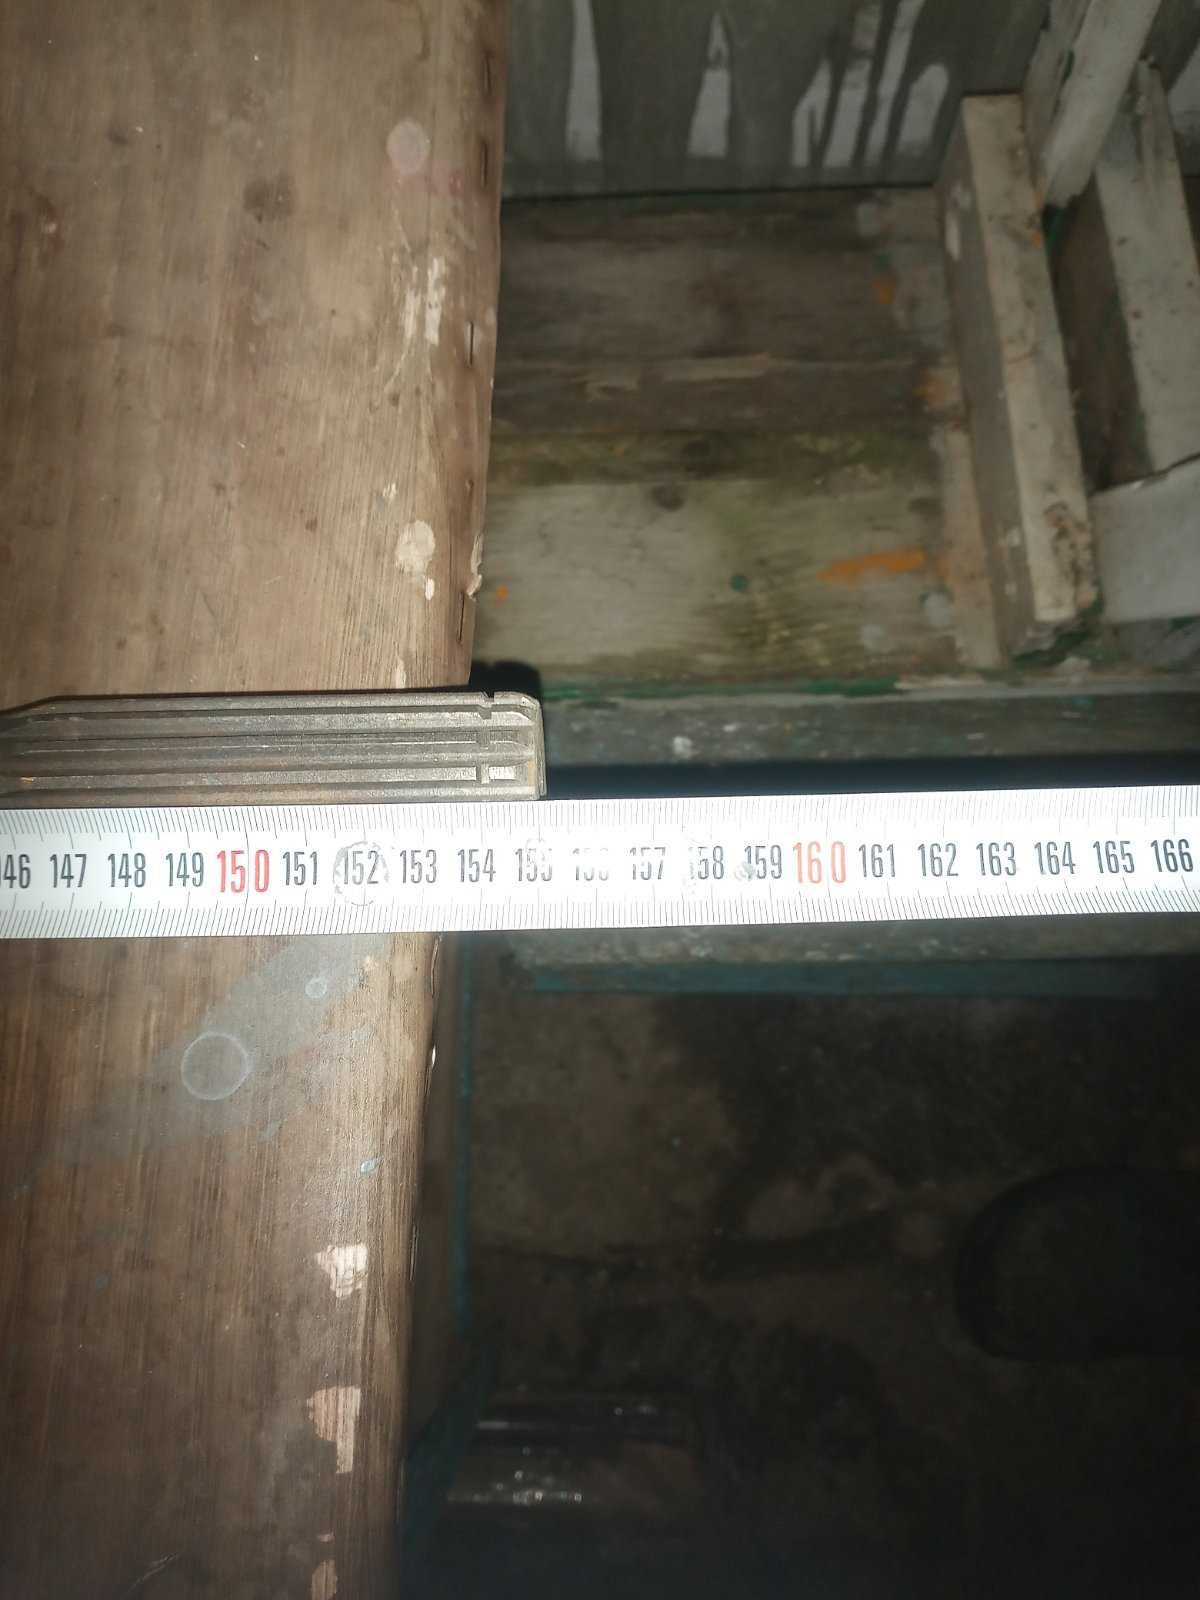 Вал привода ВОМ Т 150К ( Украина) 151.37.397 длина 1-метр 55см